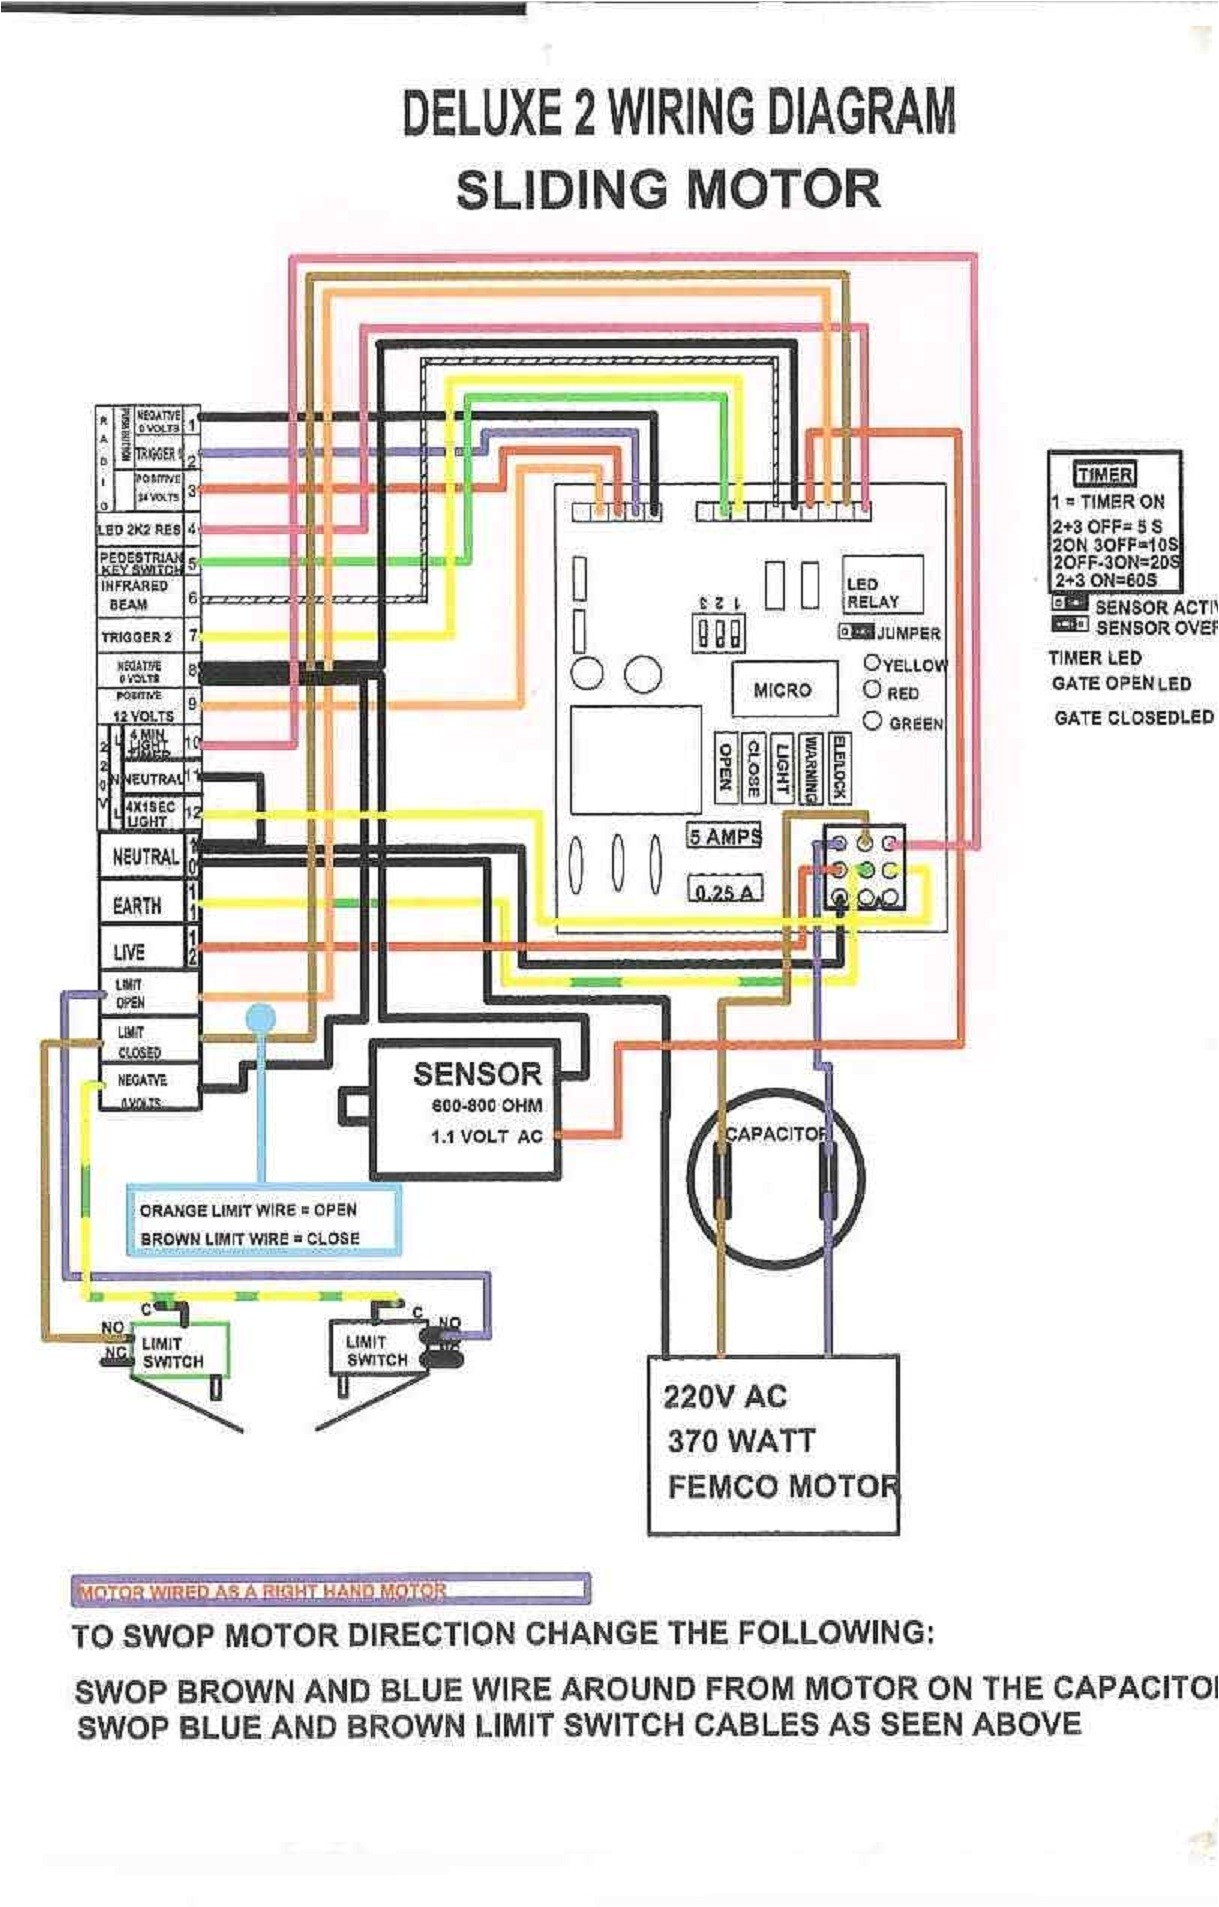 auto gate wiring diagram wiring diagram local sliding gate wiring diagram auto gate wiring diagram wiring